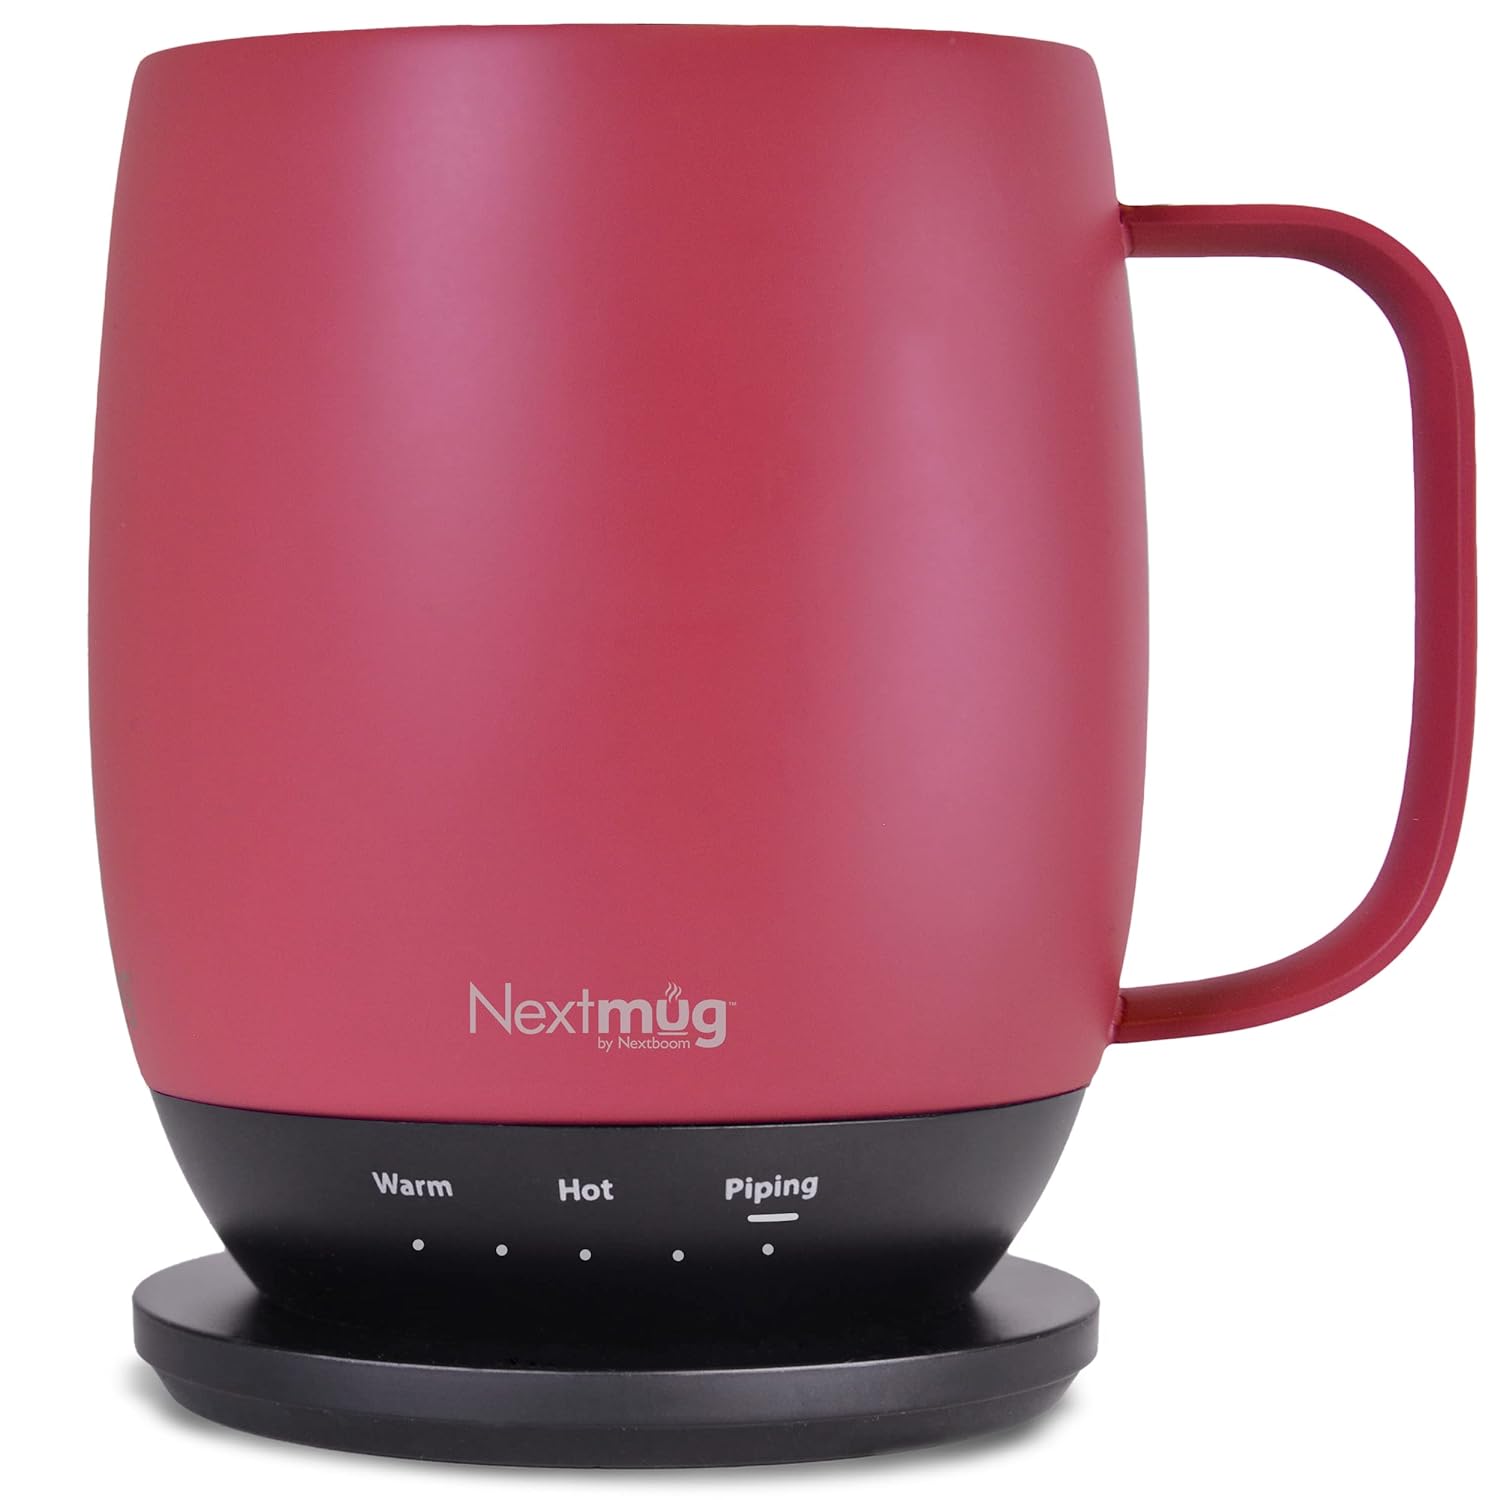 Nextmug - Temperature-Controlled, Self-Heating Coffee Mug (Dusty Rose - 14 oz.)